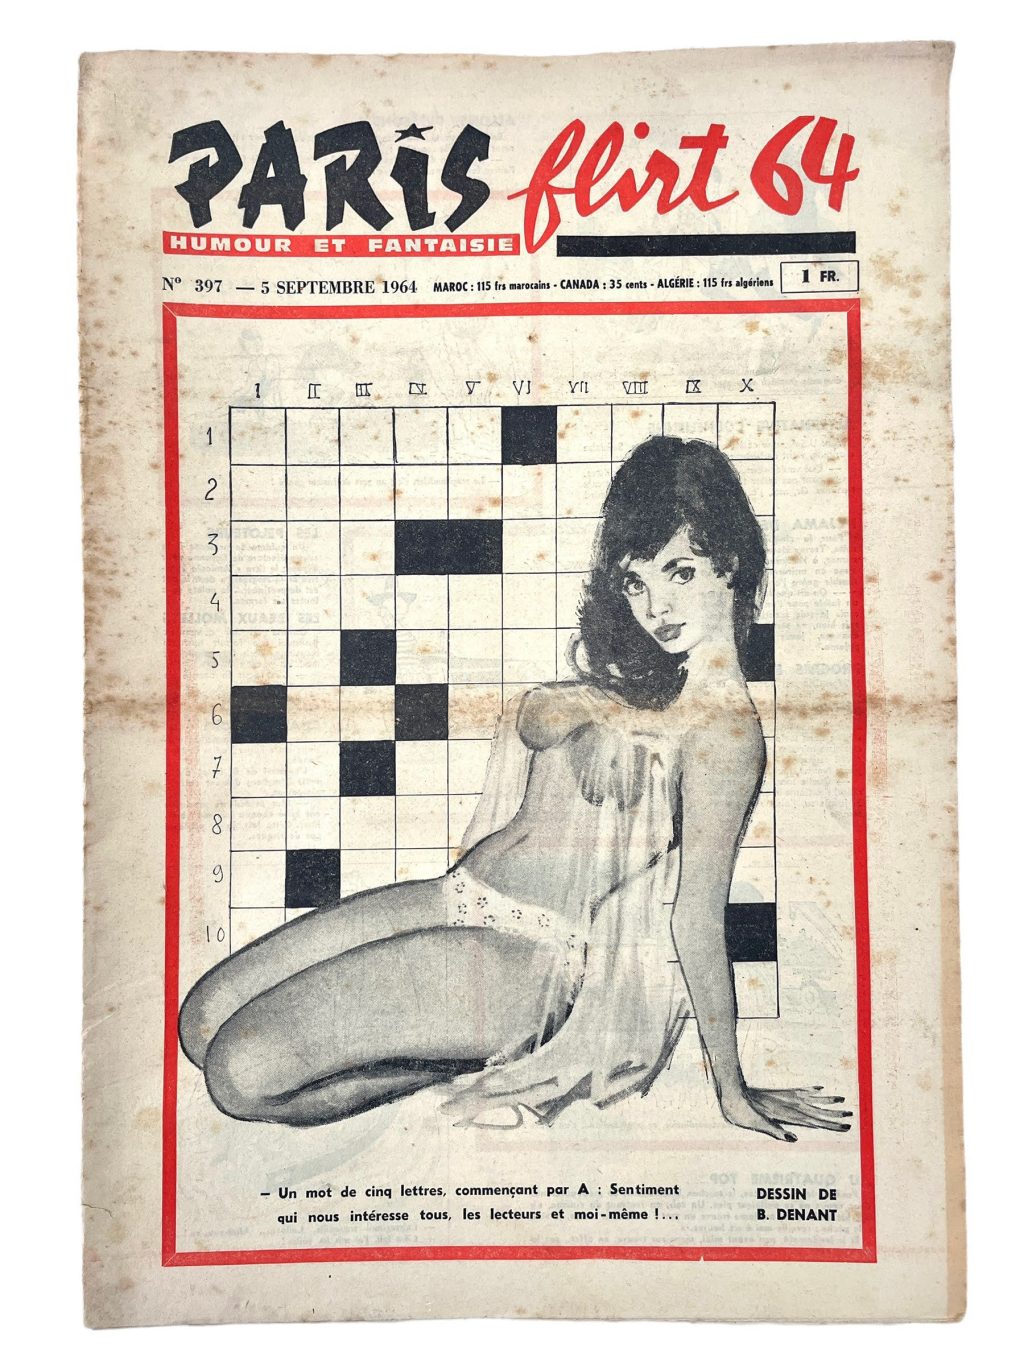 Vintage French Paris Flirt Number 397 5/9/1964 Adult Comic Newspaper Humour Fantasy Cartoons Romance Memorabilia Collector c1964-65 / EVE